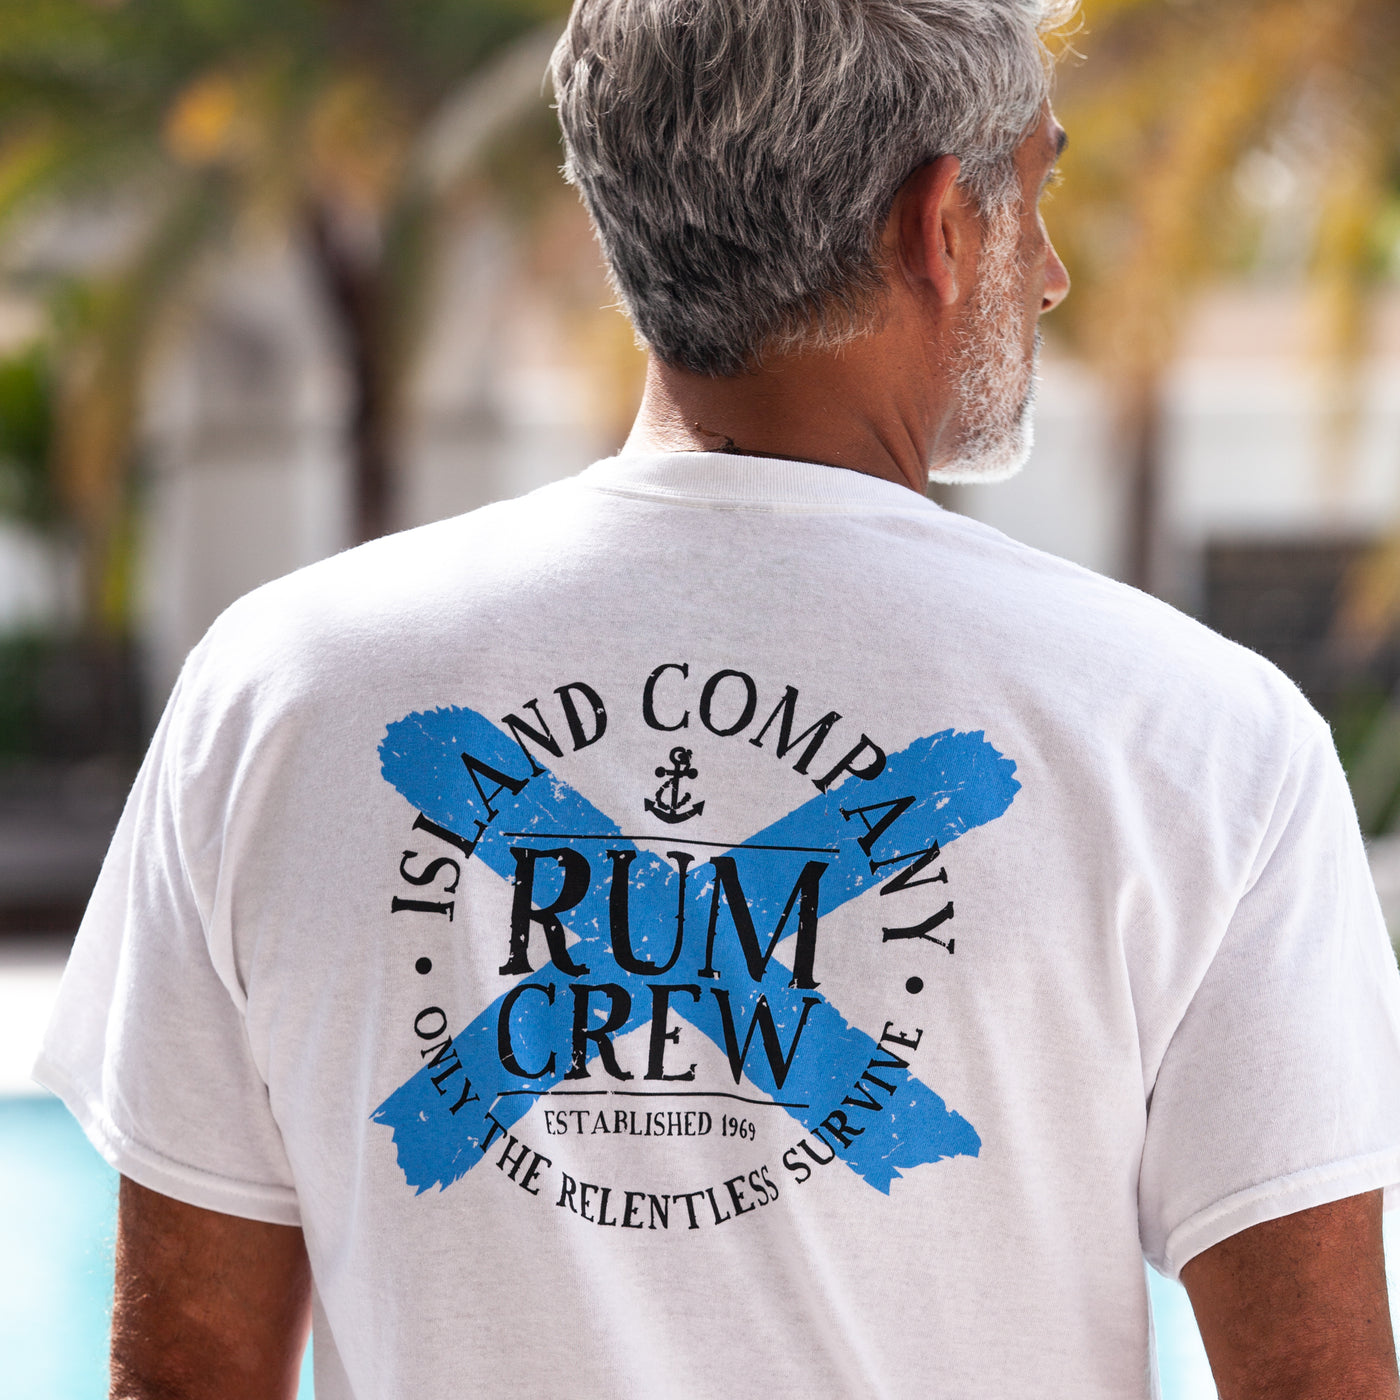 Rum Crew® - Island Company Rum - Unisex Tee Shirt - White | Best tasting rum | Buy rum online | islandcompanyrum.com